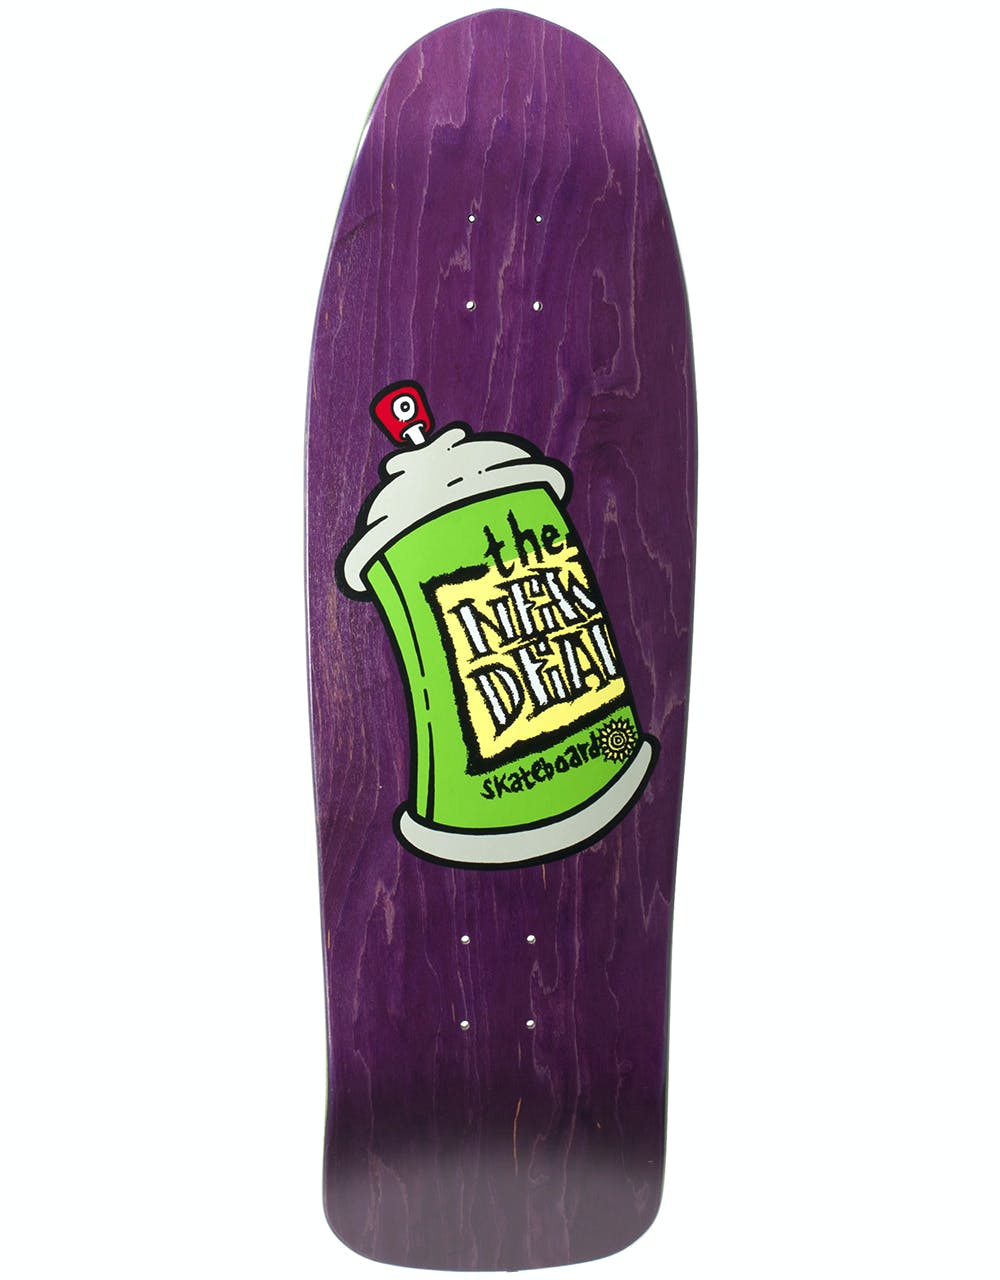 The New Deal Spray Can SP Skateboard Deck - 9.75"